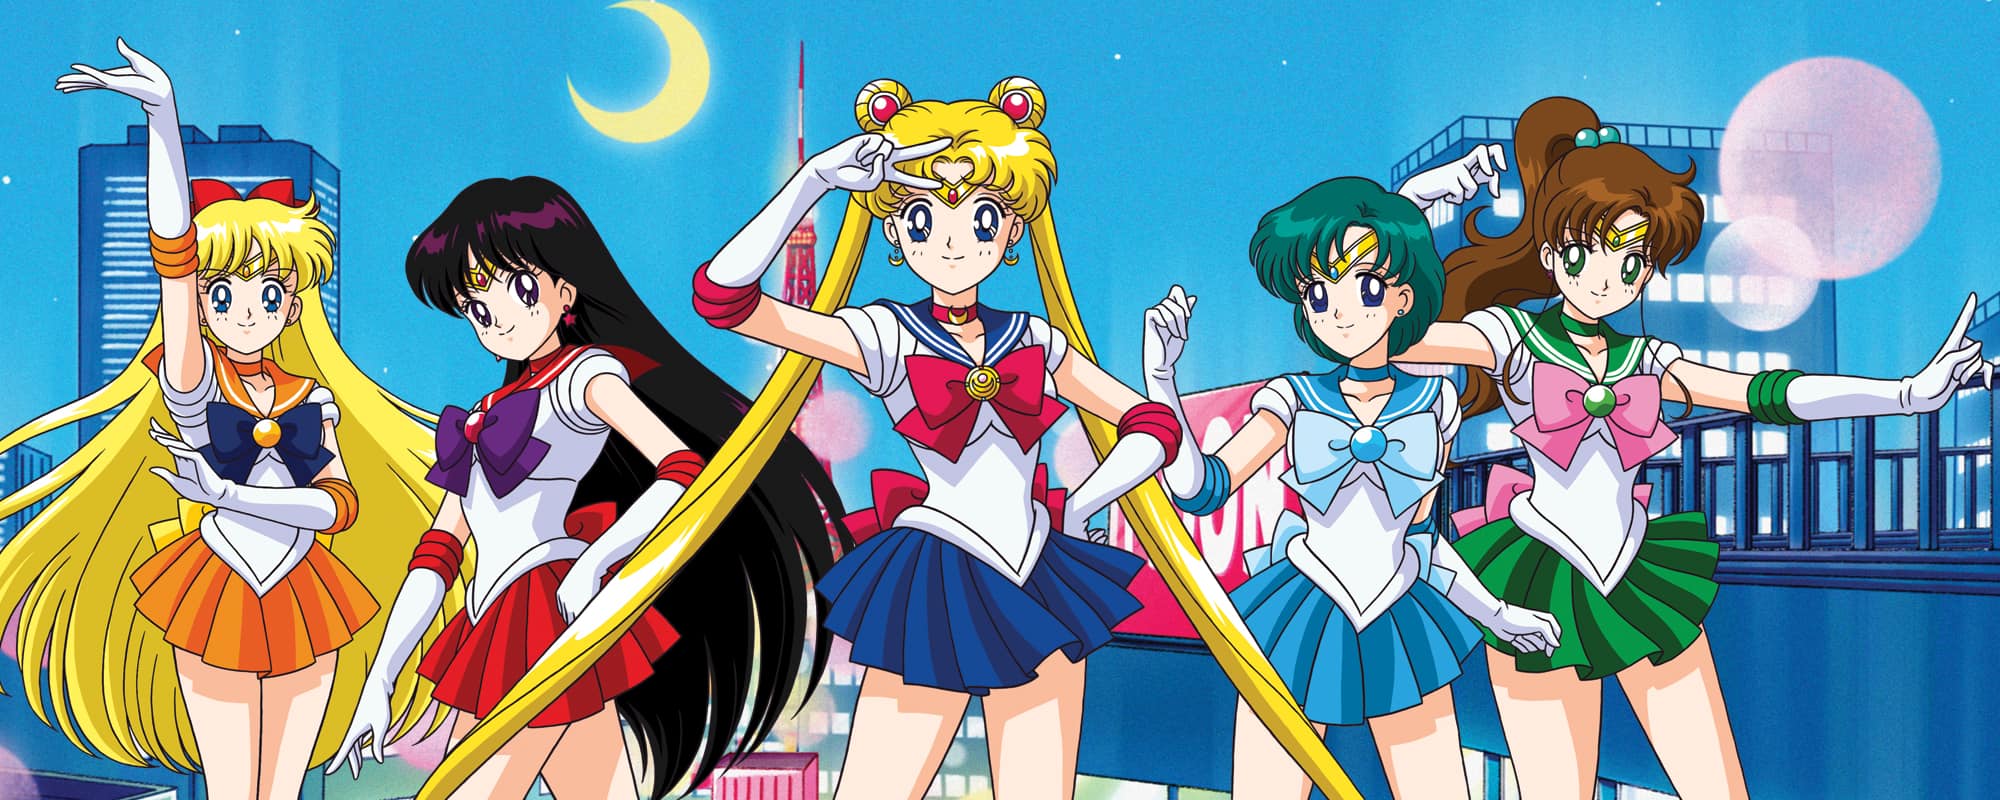 sailor moon, anime series